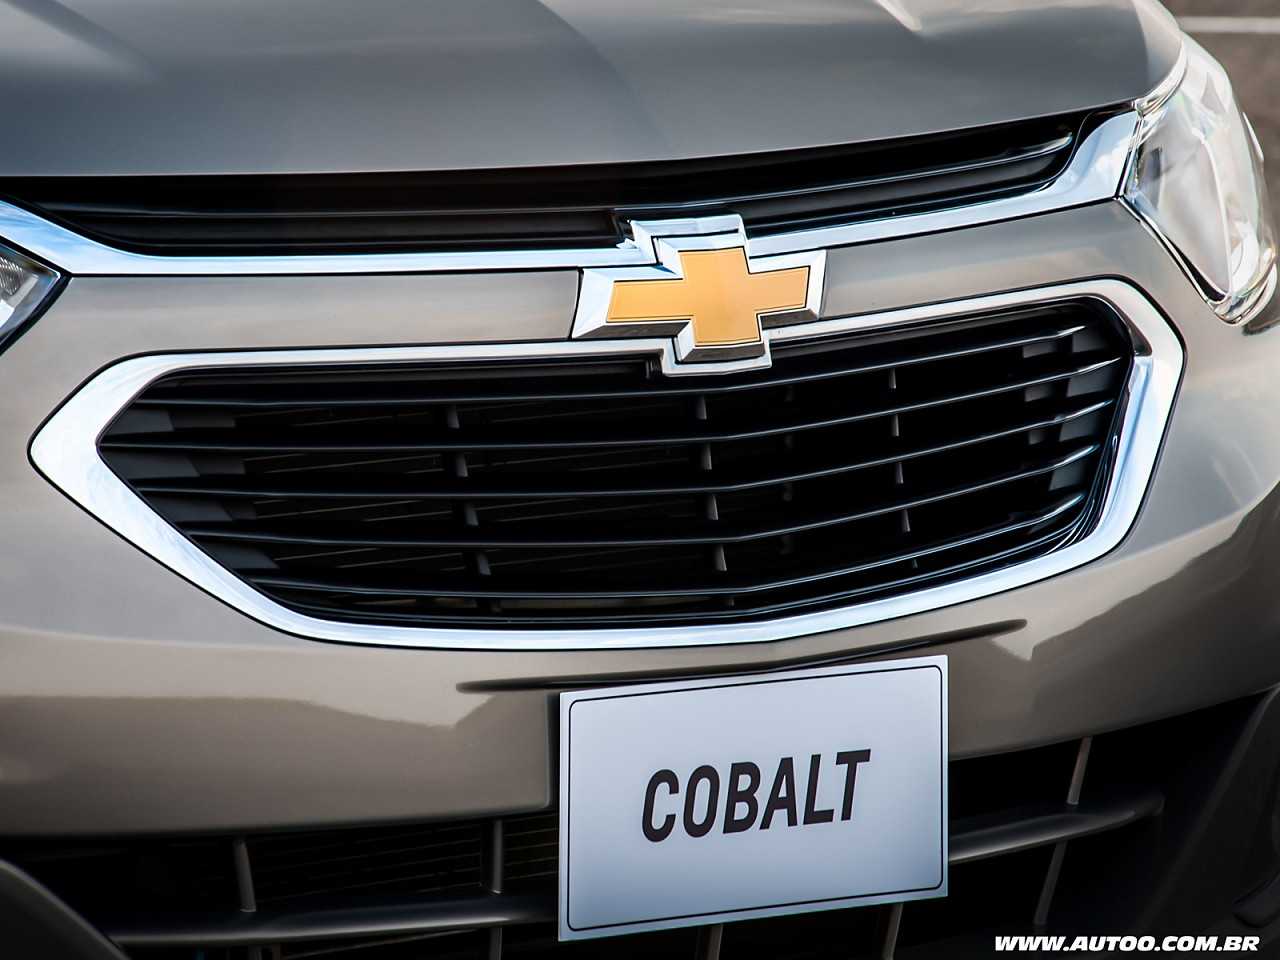 ChevroletCobalt 2016 - grade frontal